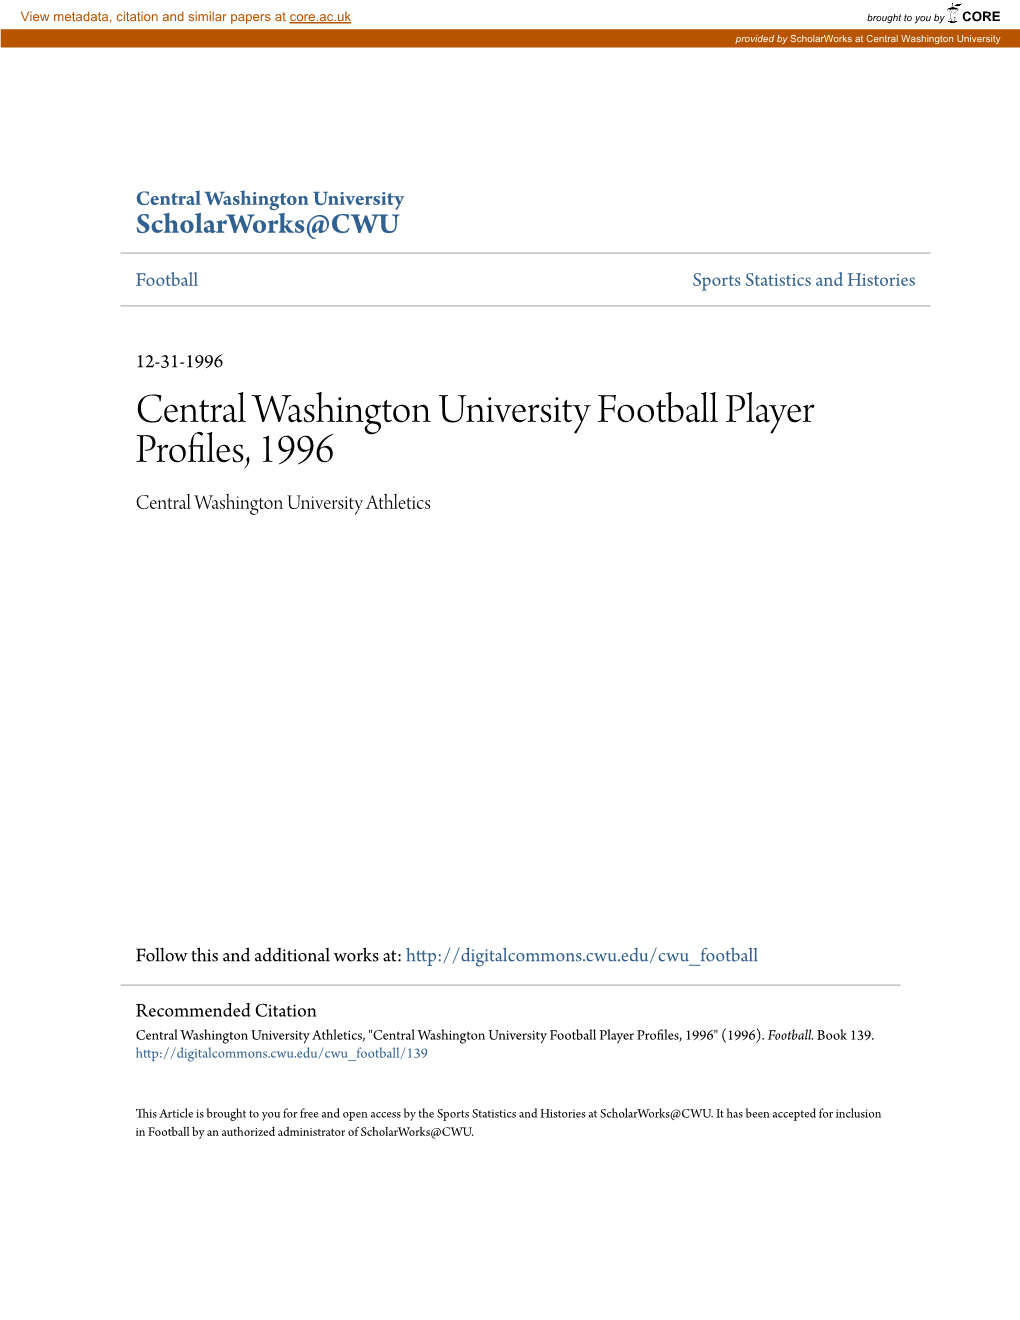 Central Washington University Football Player Profiles, 1996 Central Washington University Athletics